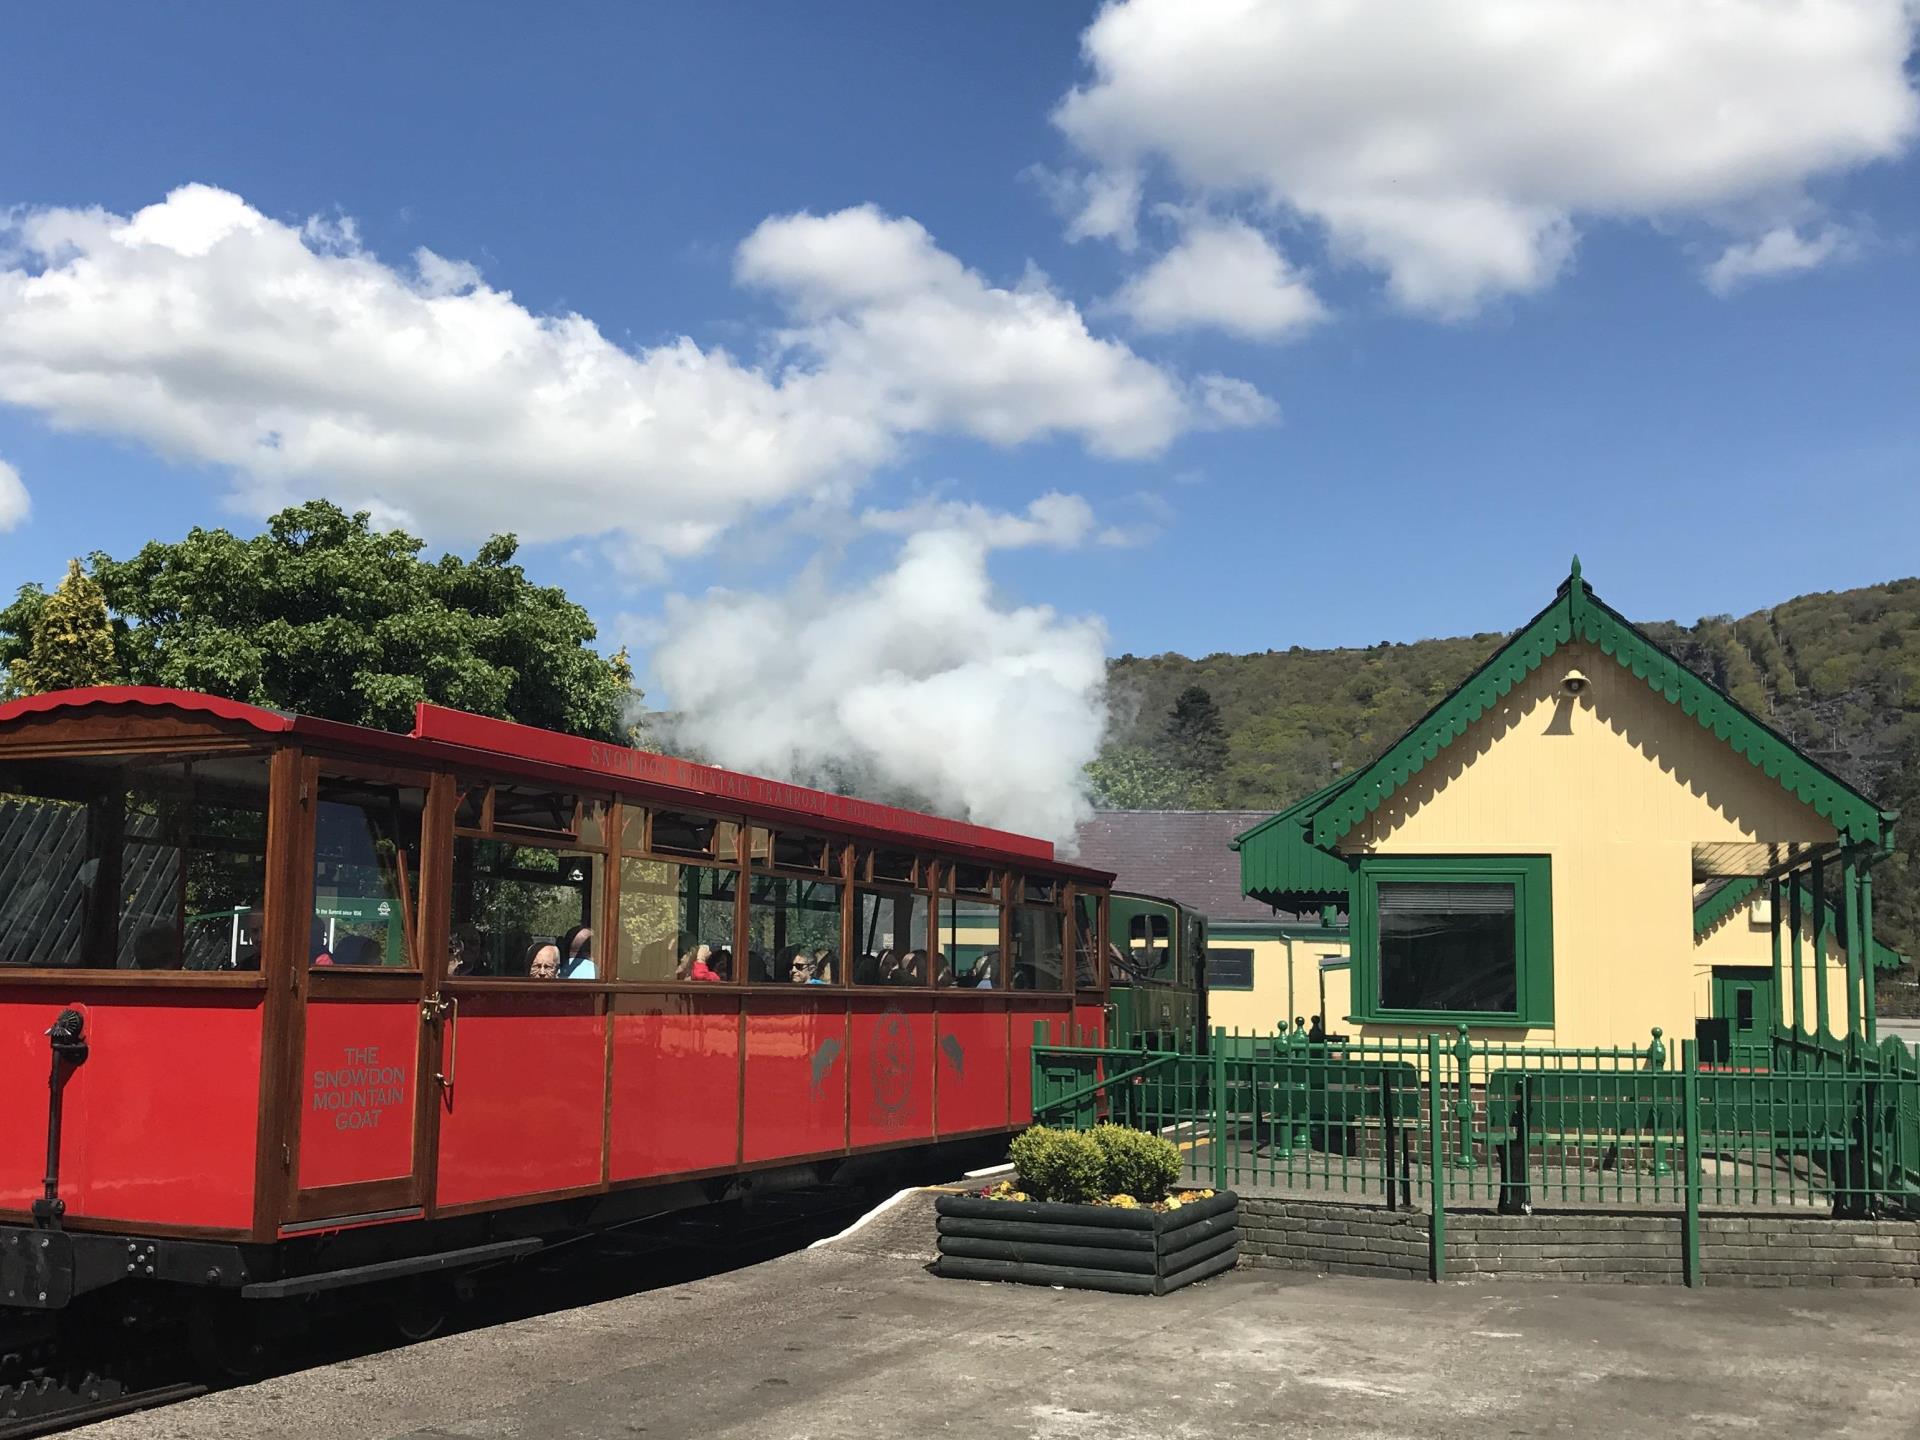 Steam train departing Llanberis Station